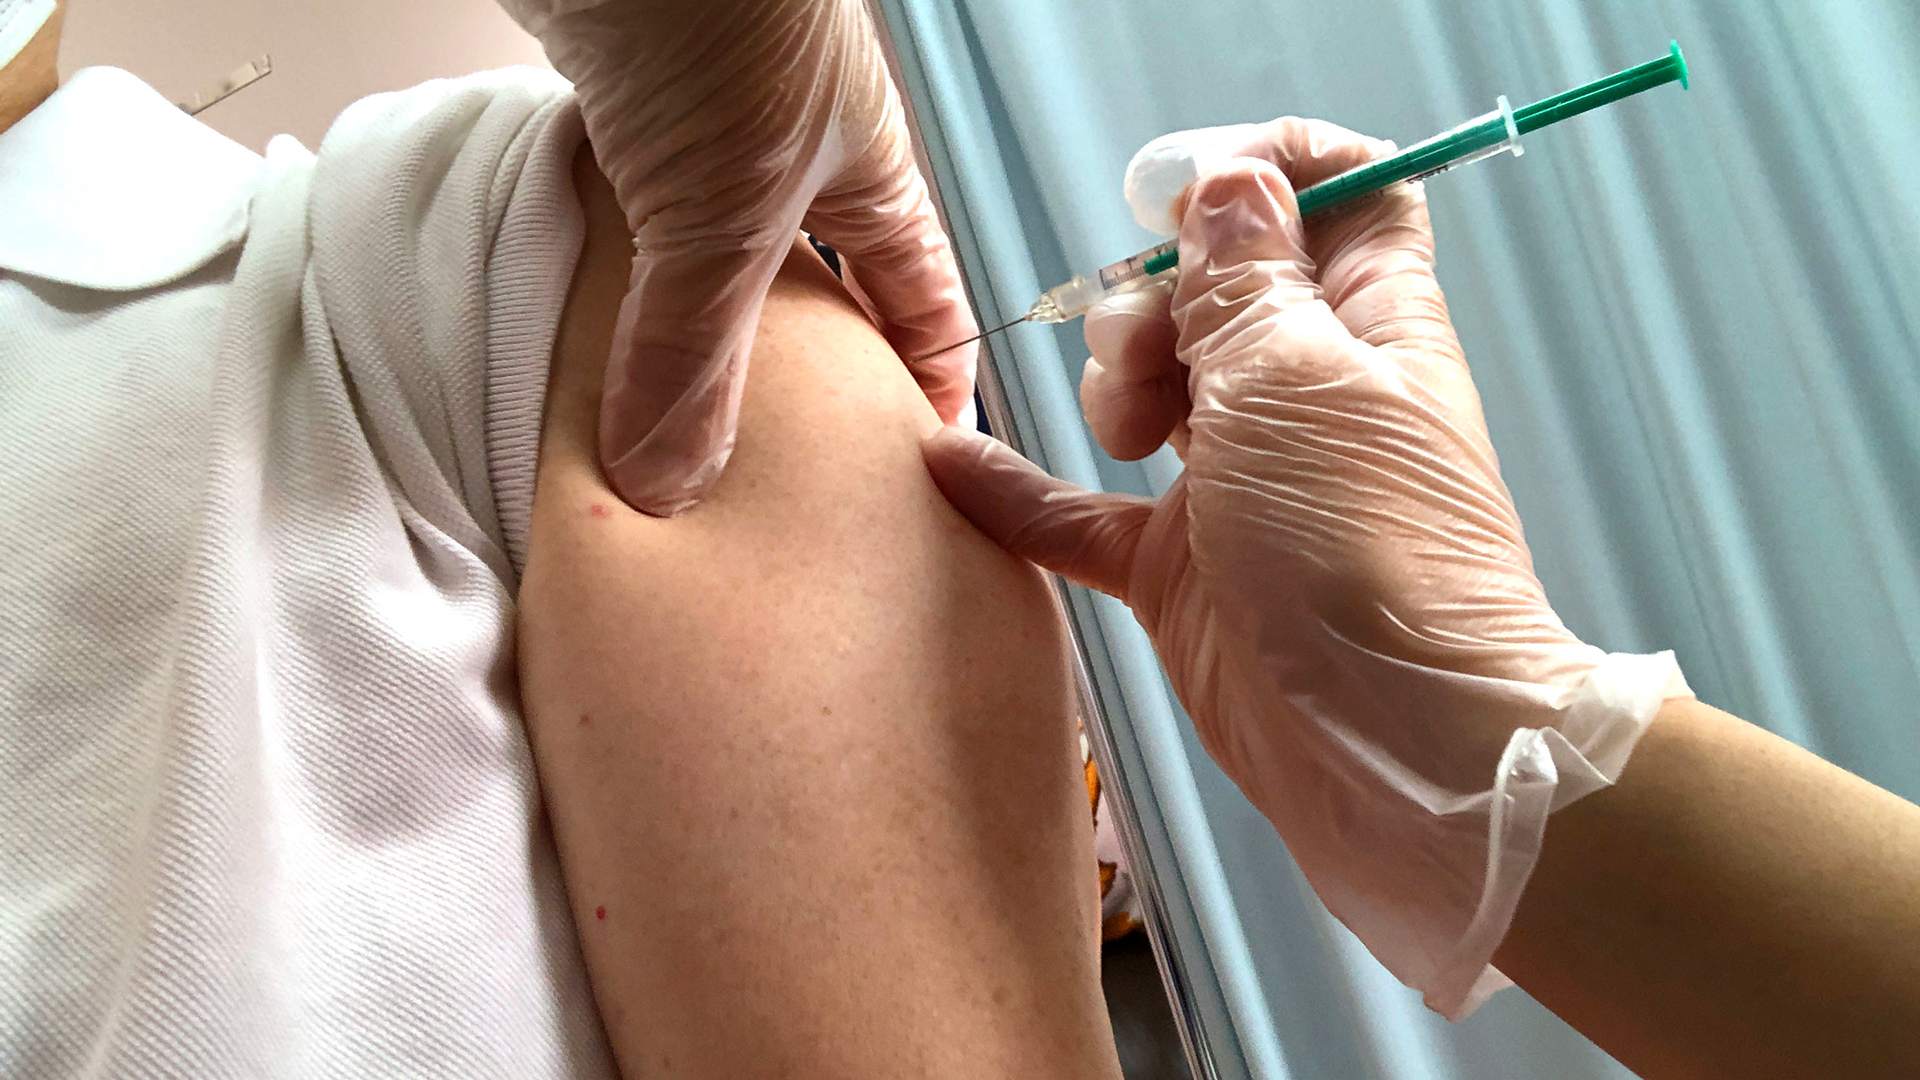 Covid-19-Impfung: Arm mit Spritze